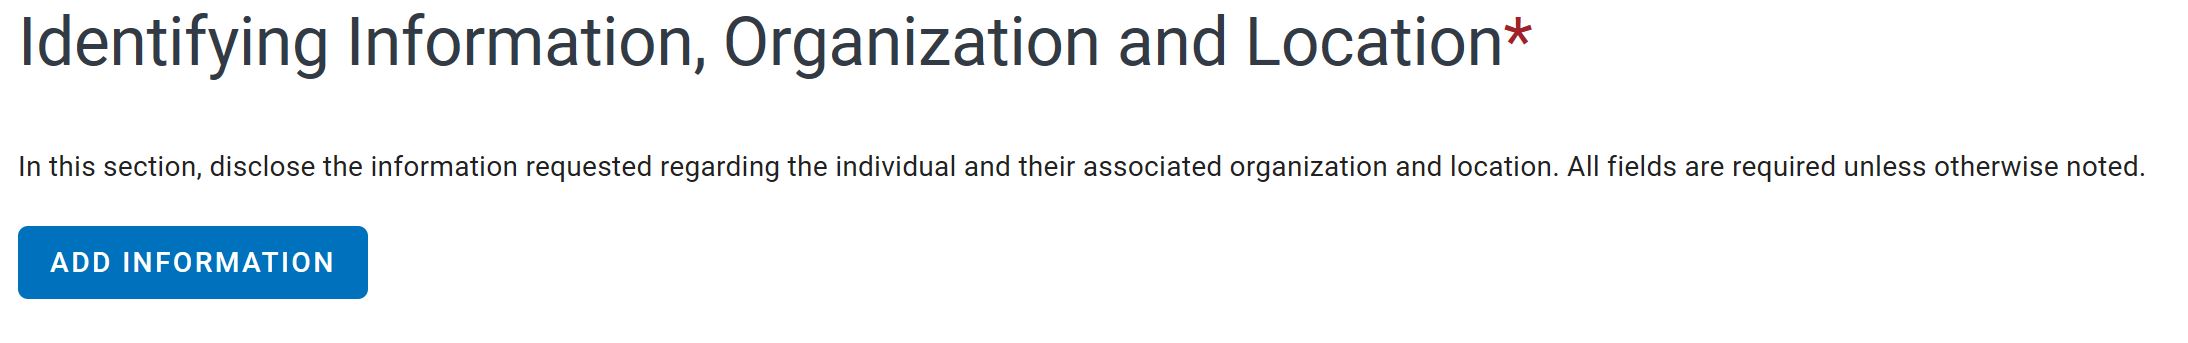 Identifying Information, Organization and Location start